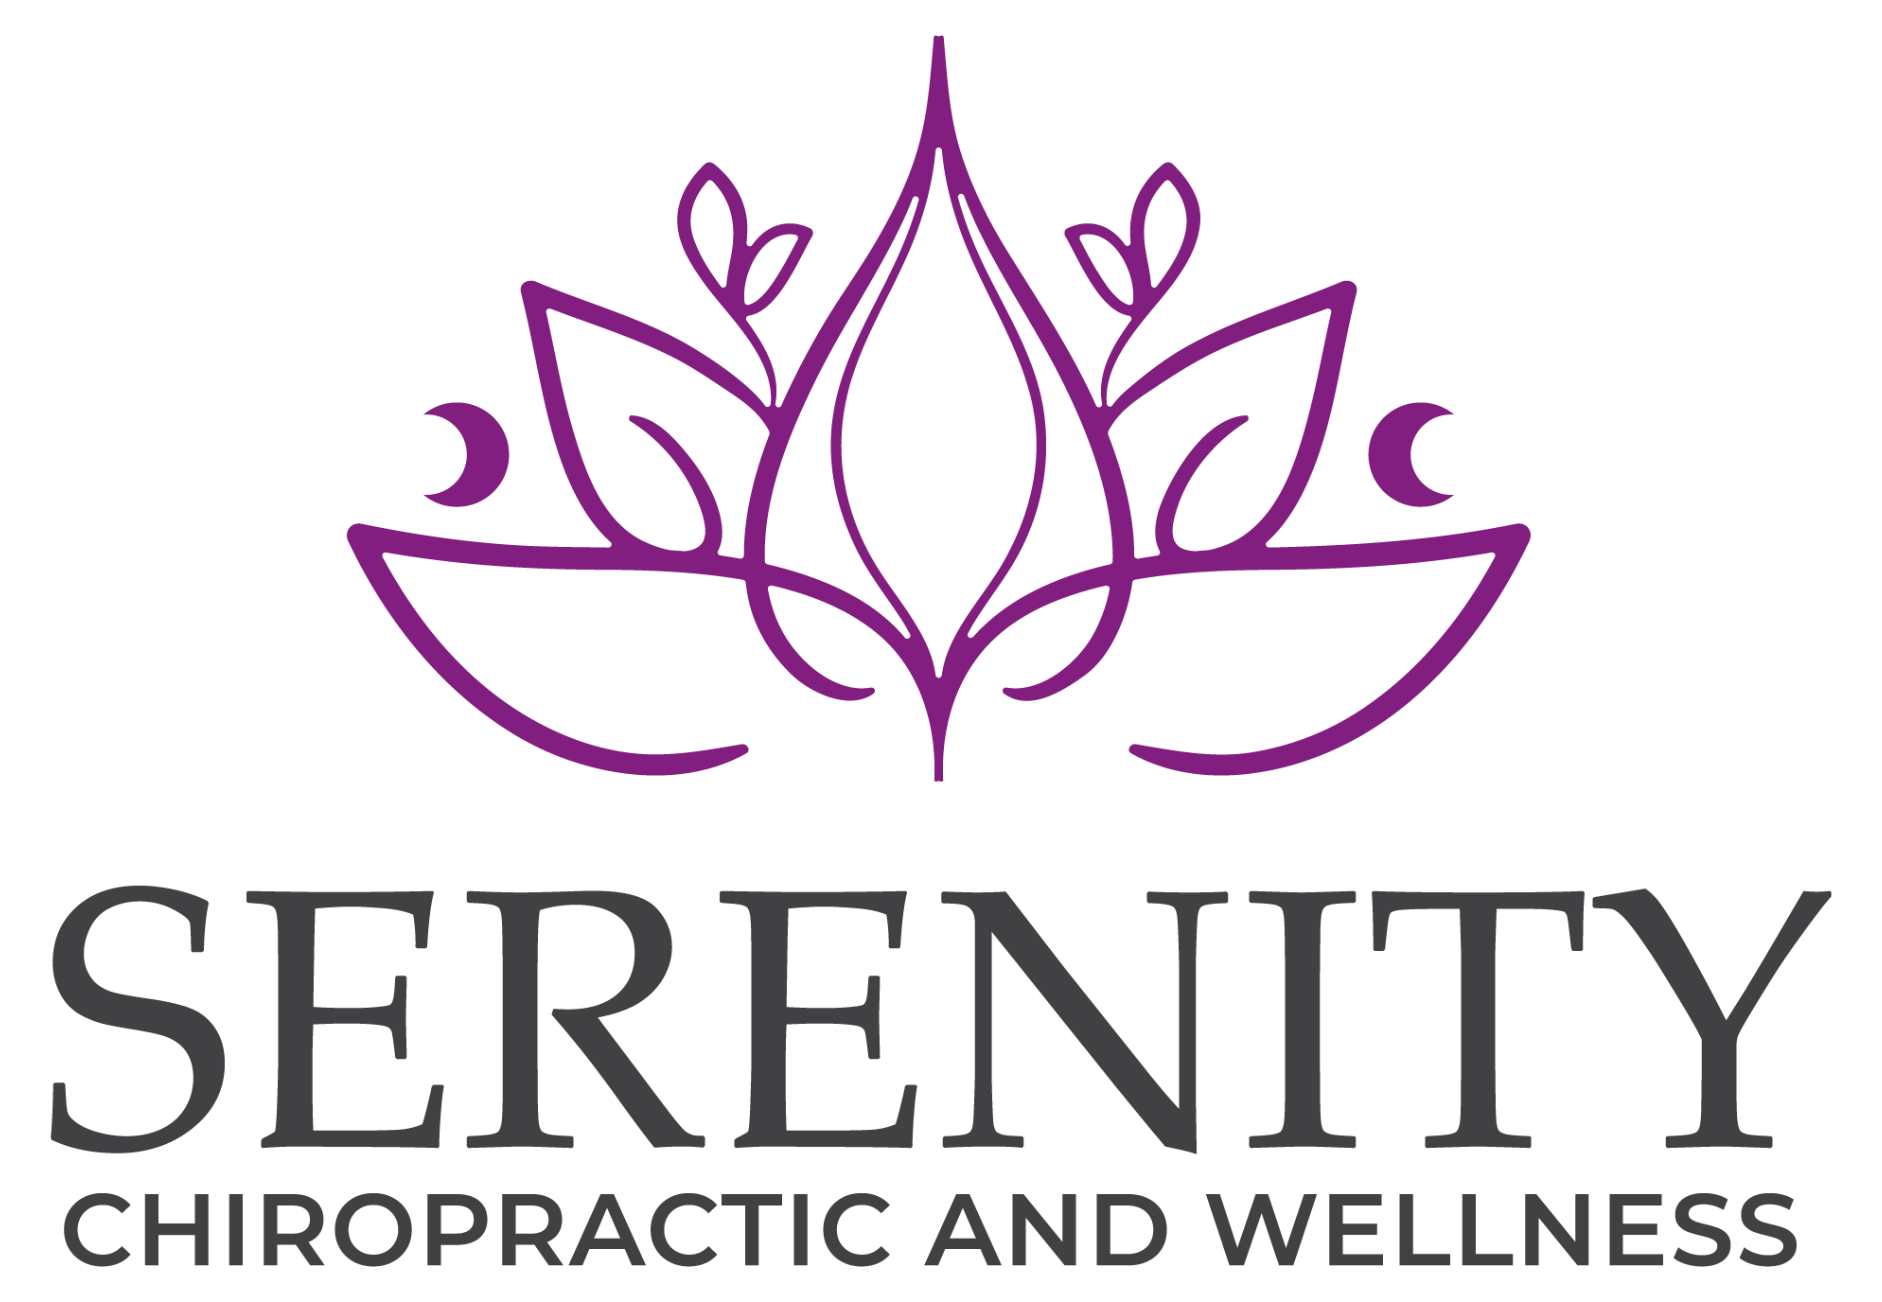 Serenity Chiropractic and Wellness Business Logo